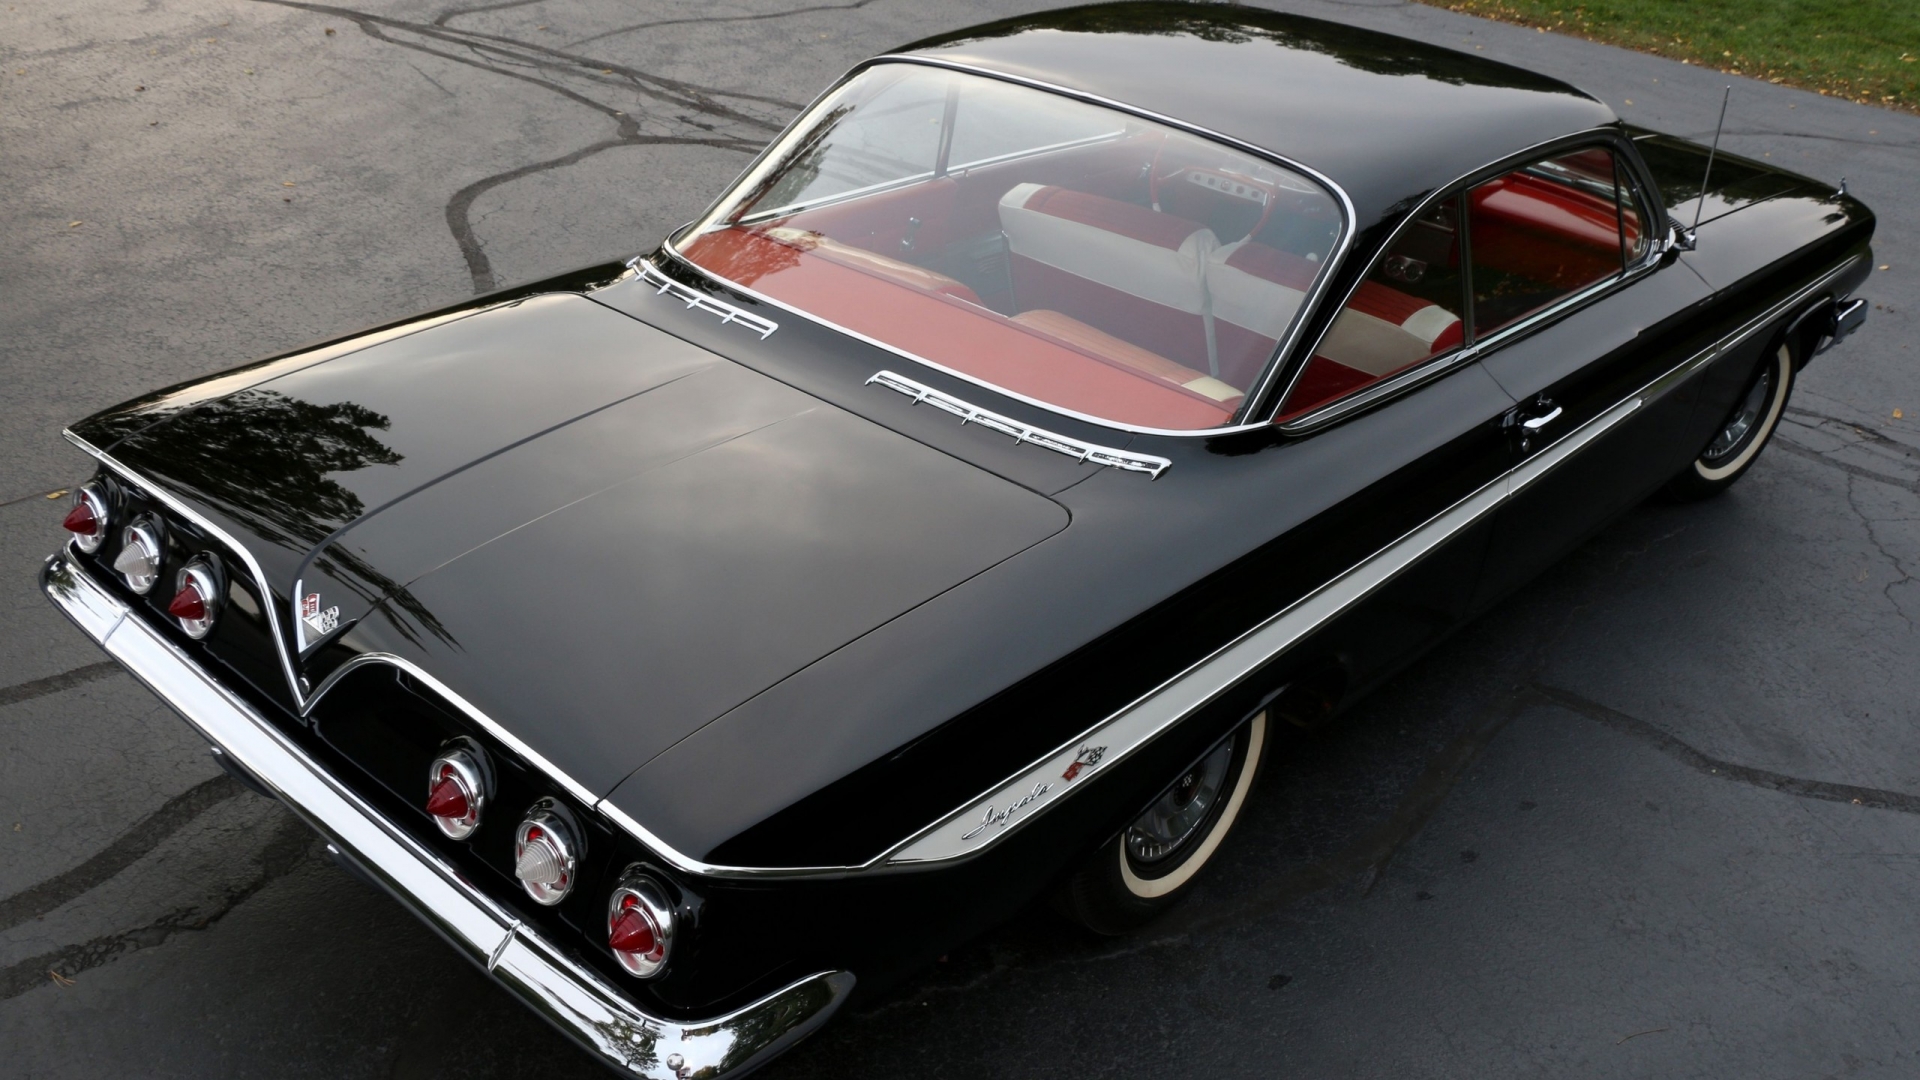 Black Chevrolet Impala 1961 for 1920 x 1080 HDTV 1080p resolution